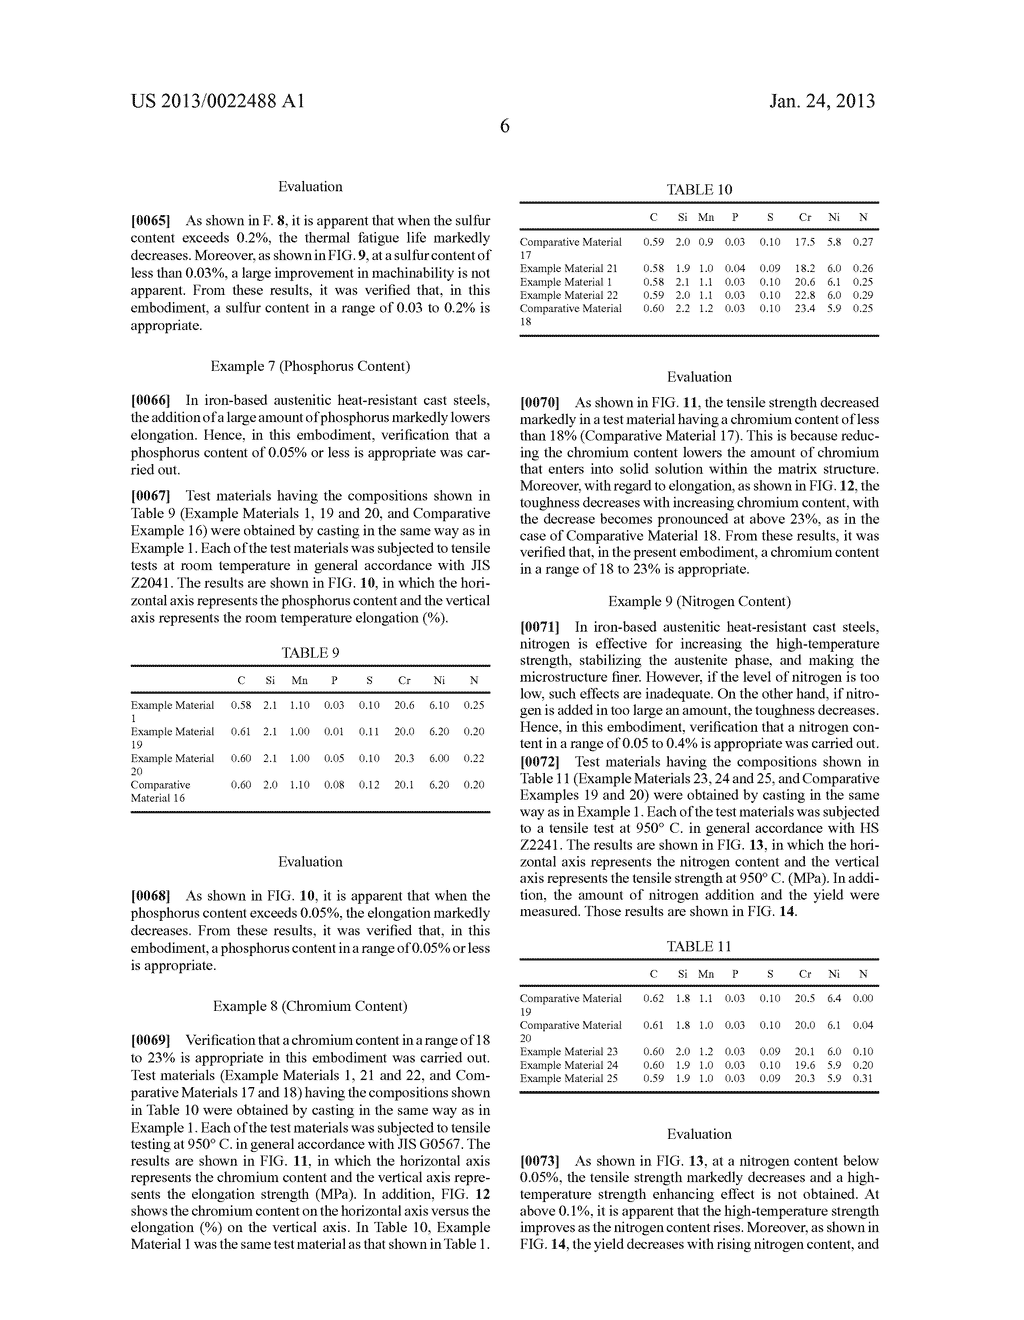 AUSTENITIC HEAT-RESISTANT CAST STEEL - diagram, schematic, and image 18